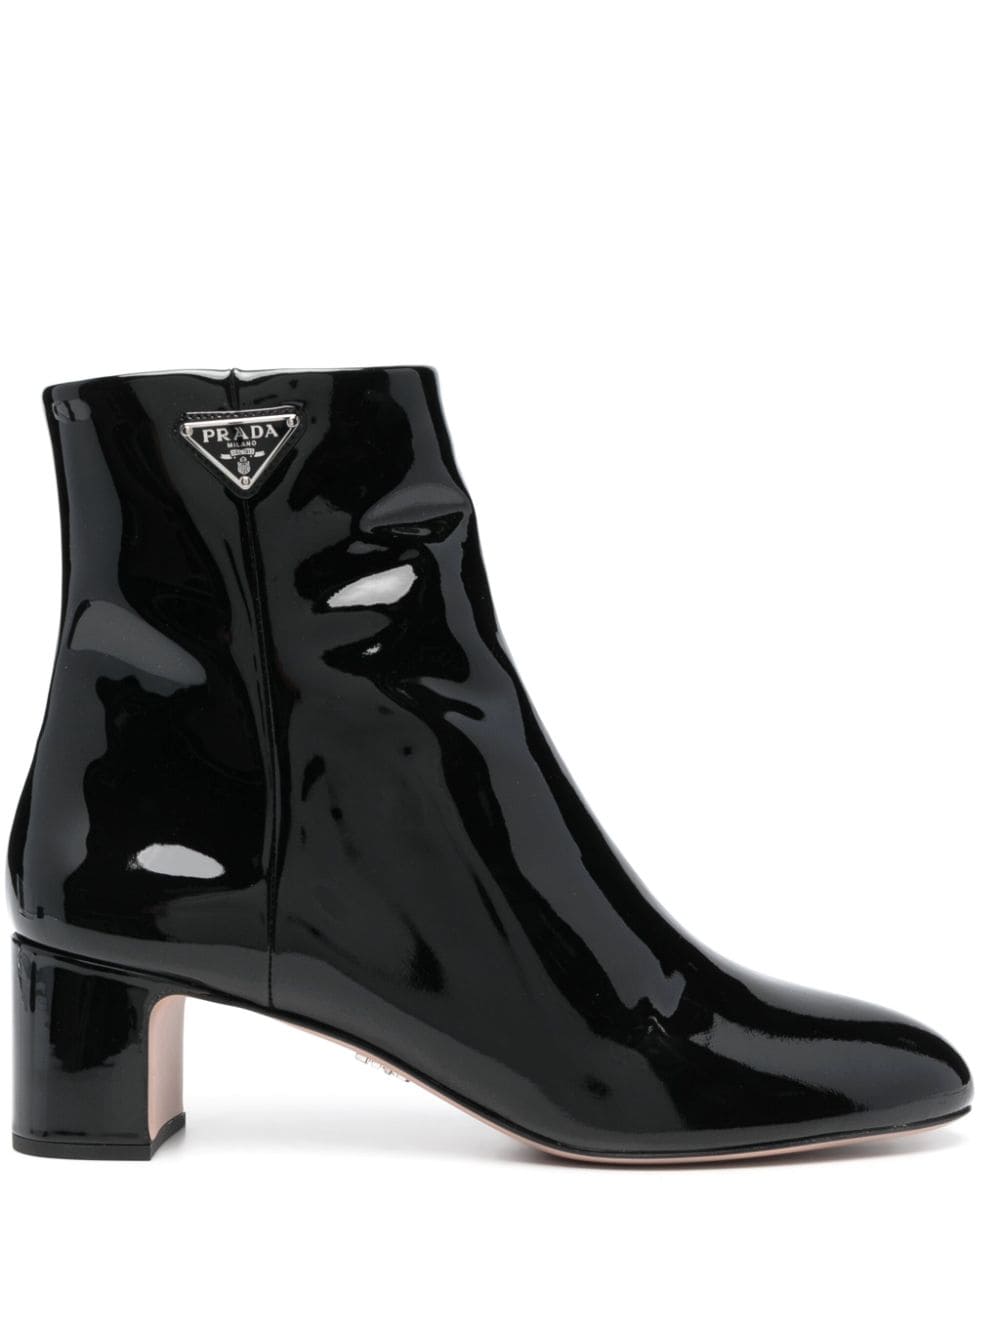 Prada high-shine finish boots - Black